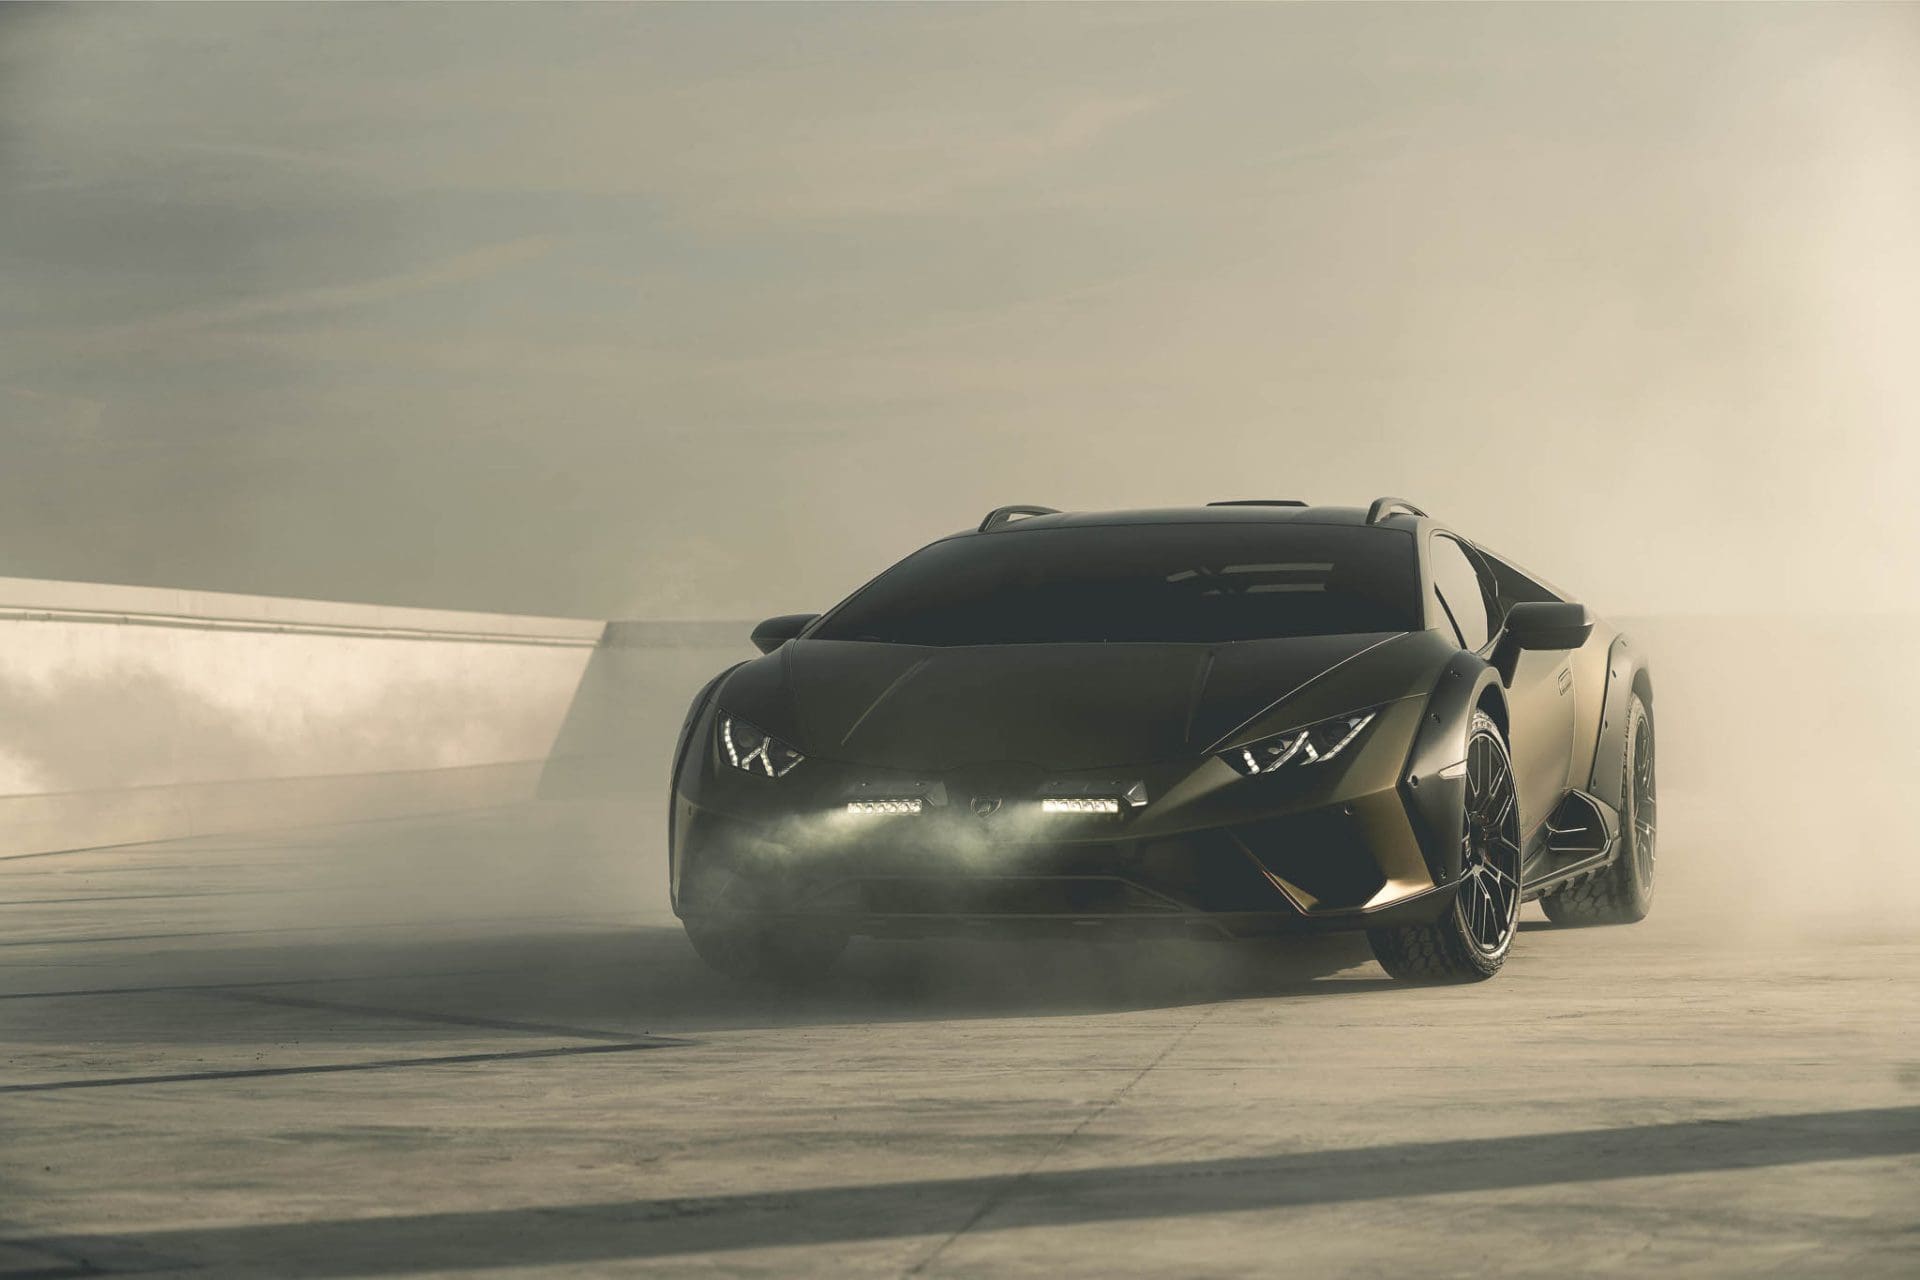 Hurácan, Lamborghini gaat off-road met nieuwe <strong>Huracan Sterrato</strong>